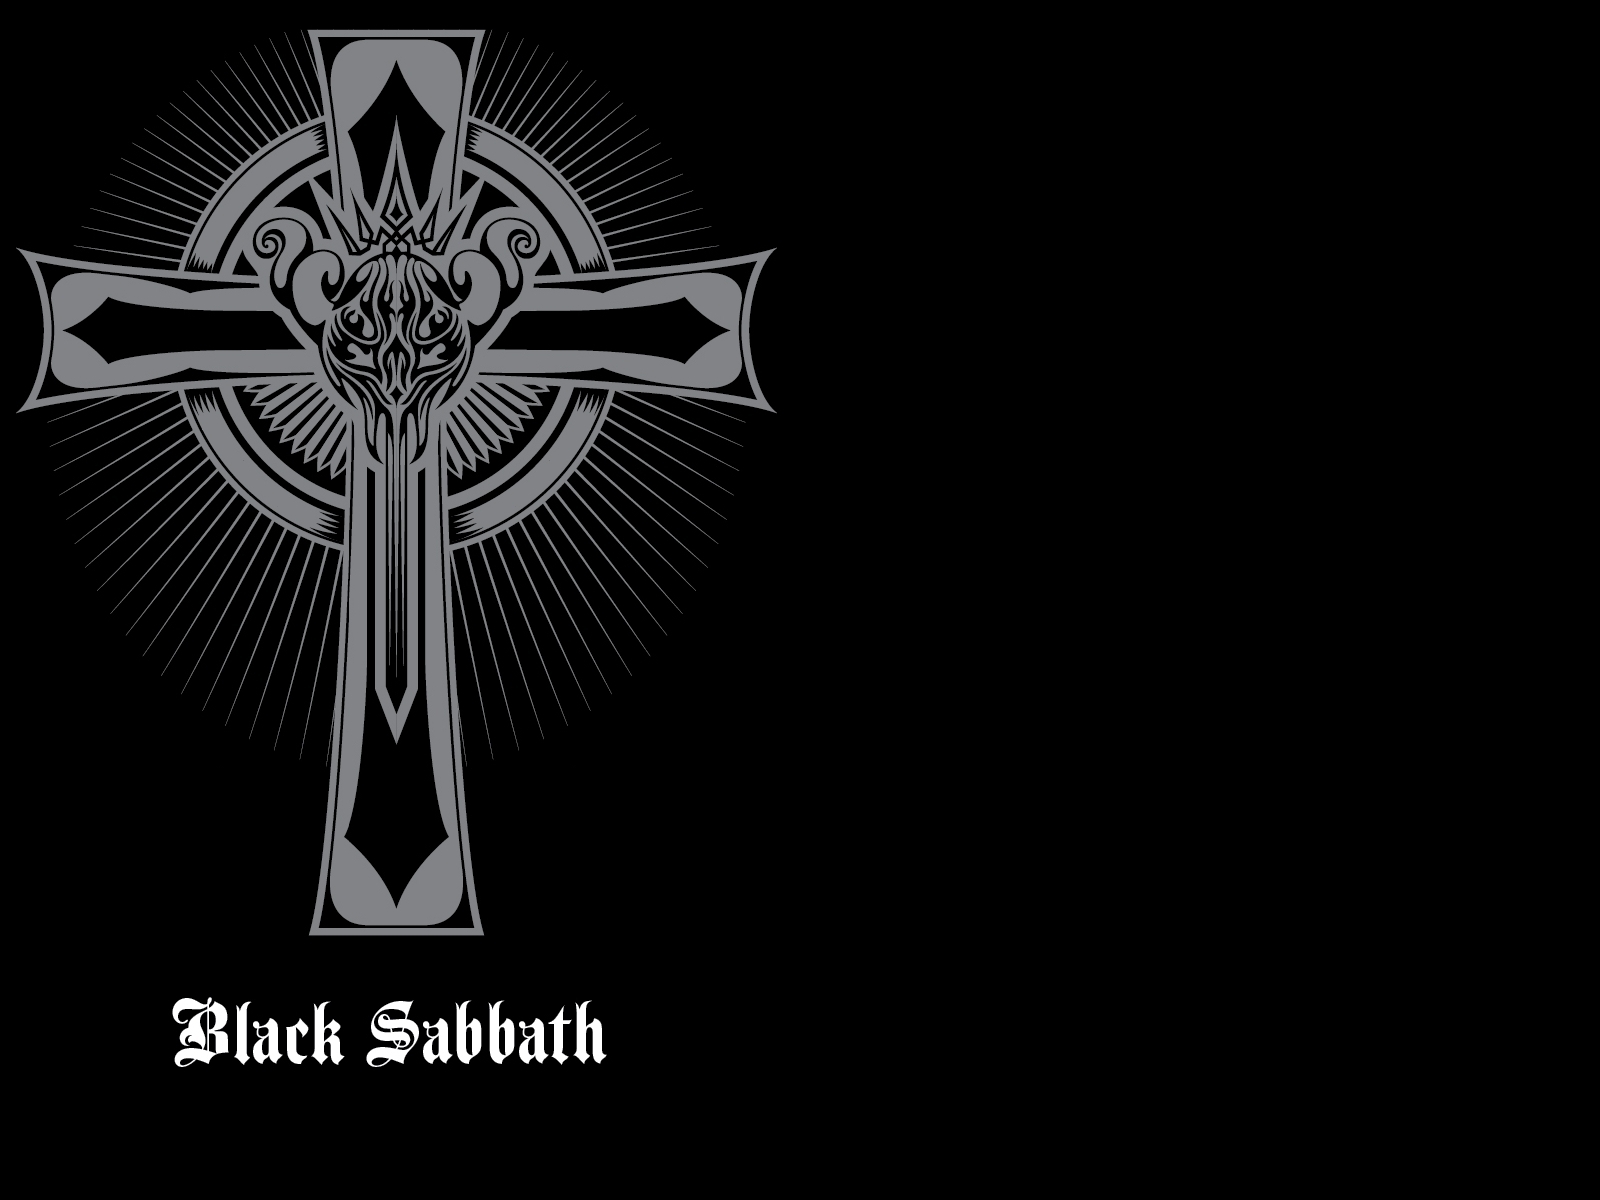 Black Sabbath Image HD Wallpaper And